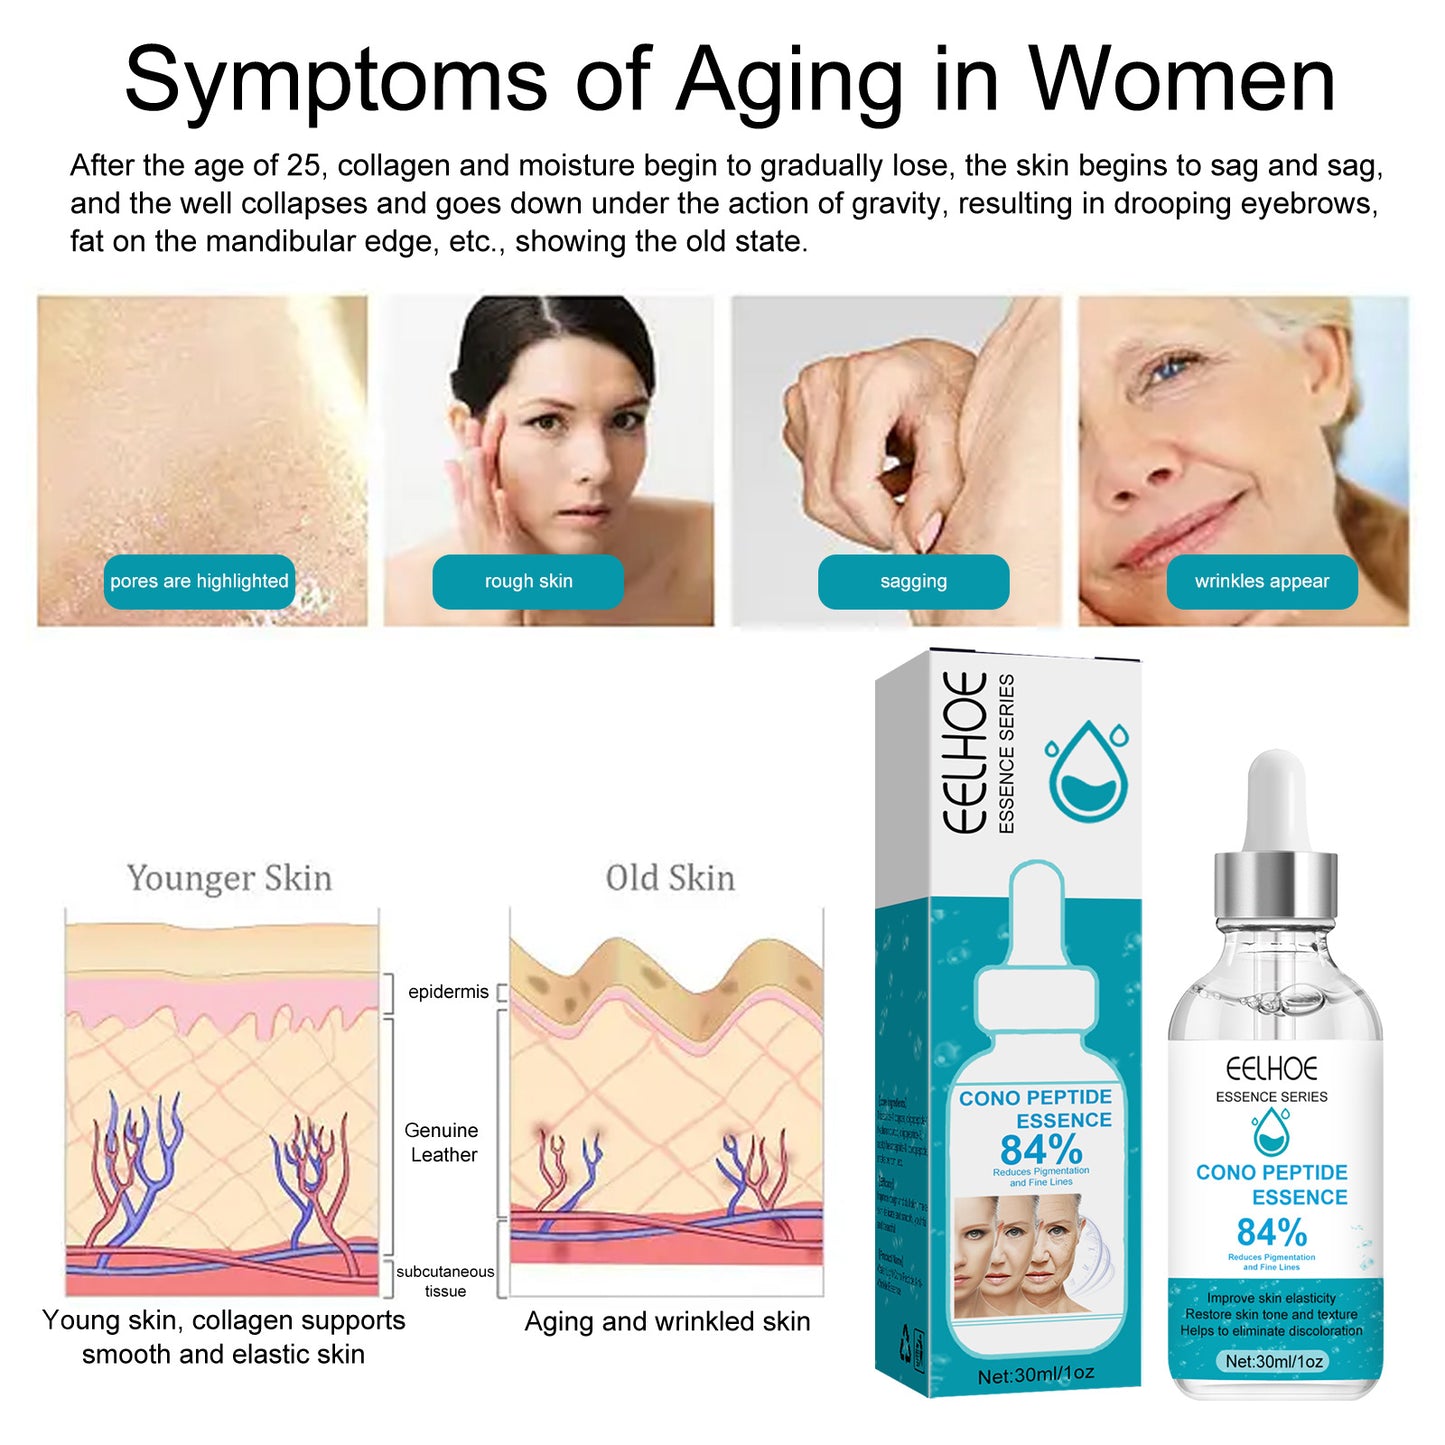 EELHOE Anti Wrinkle Essence Restore Skin Aging Sagging Collagen Improve Skin Elasticity Fade Fine Lines Wrinkle Remover Serum(30ml)